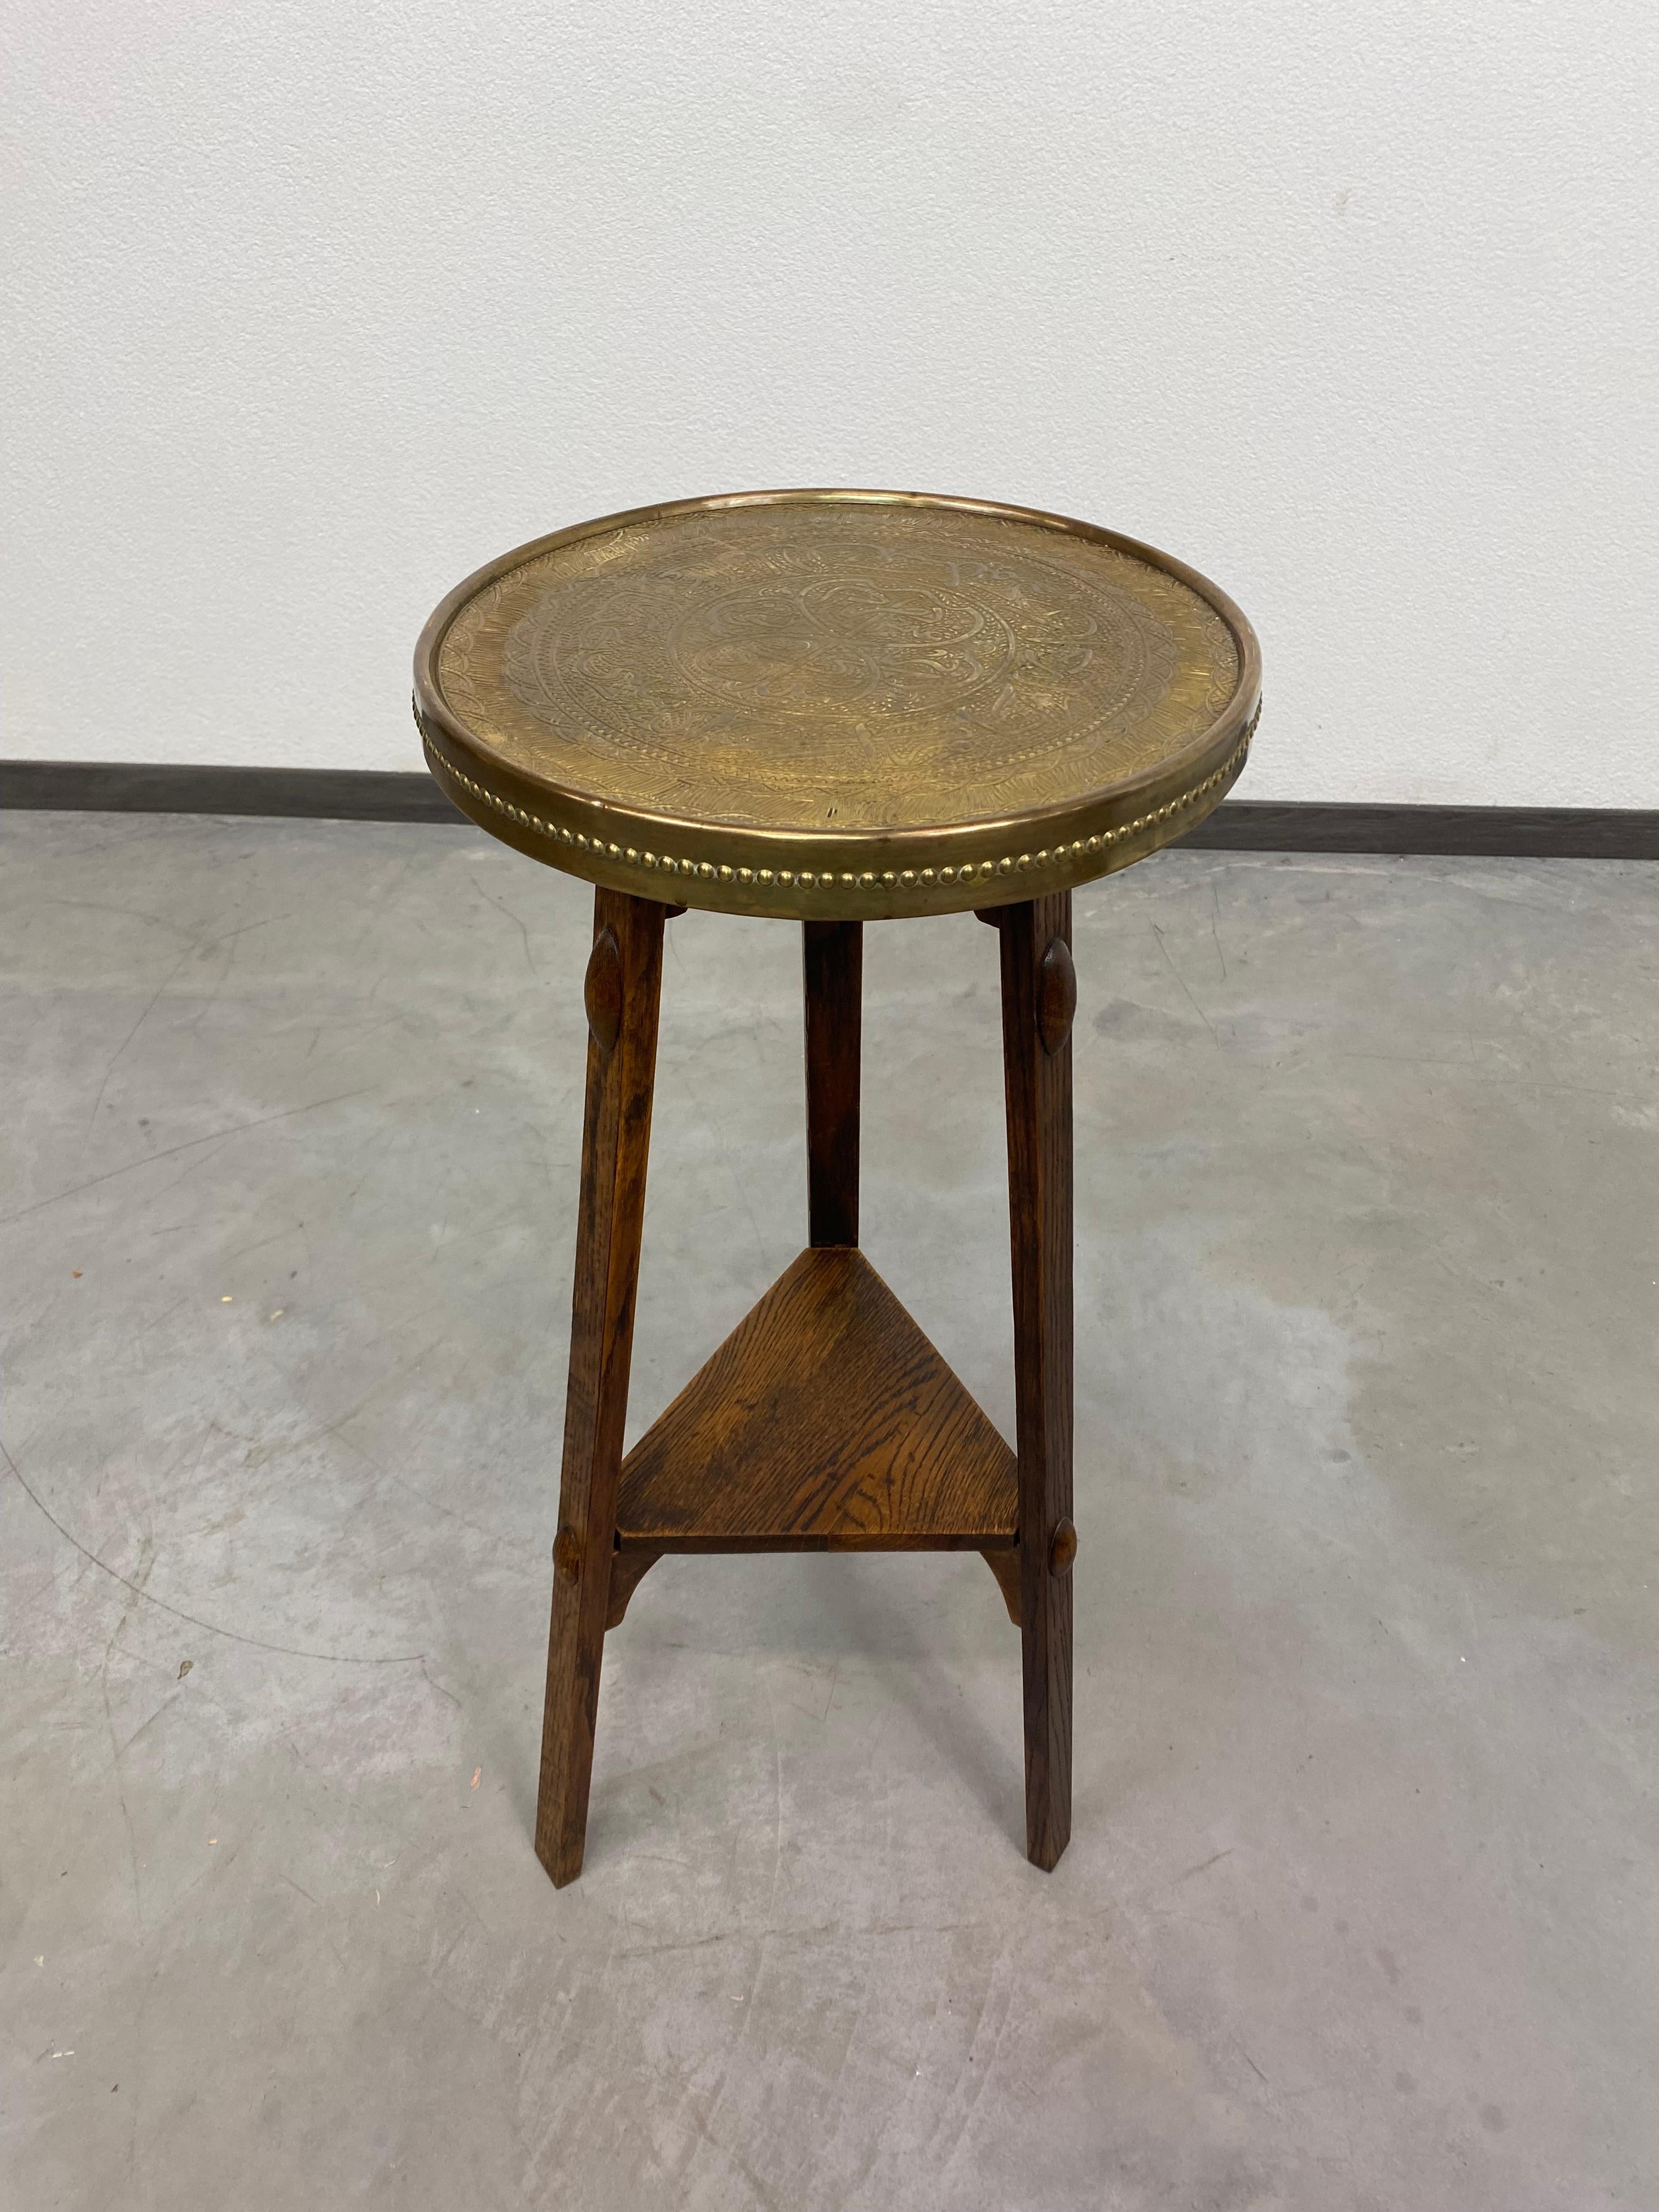 Jugendstil side table with brass top by Joseph Maria Olbrich For Sale 2